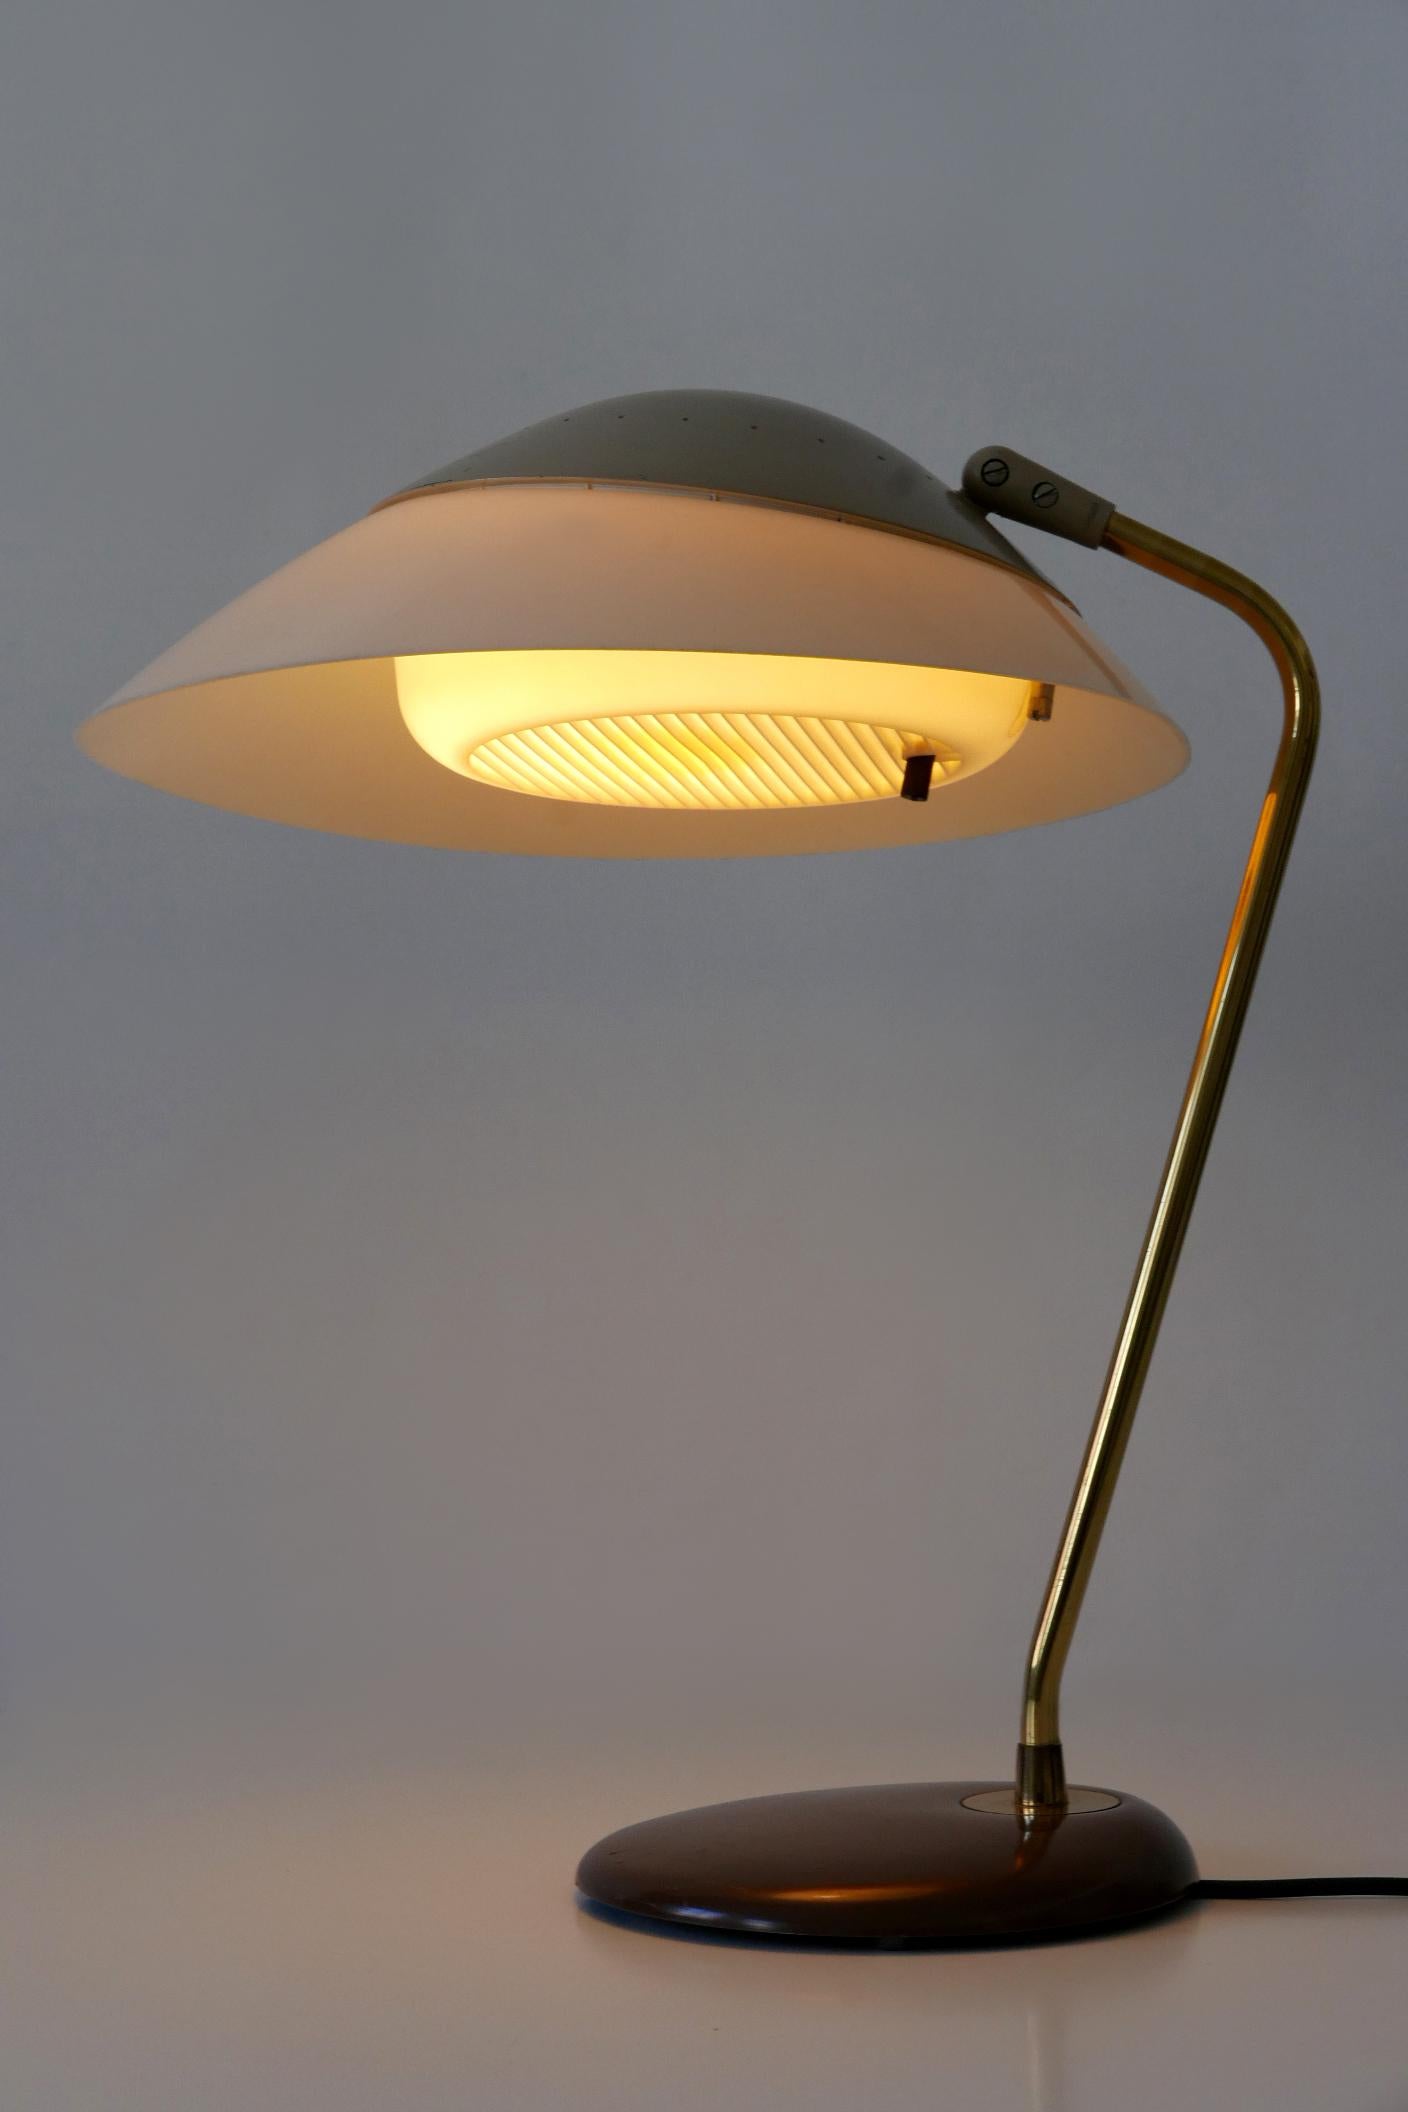 Mid-20th Century Elegant Table Lamp or Desk Light by Gerald Thurston for Lightolier USA 1950s For Sale